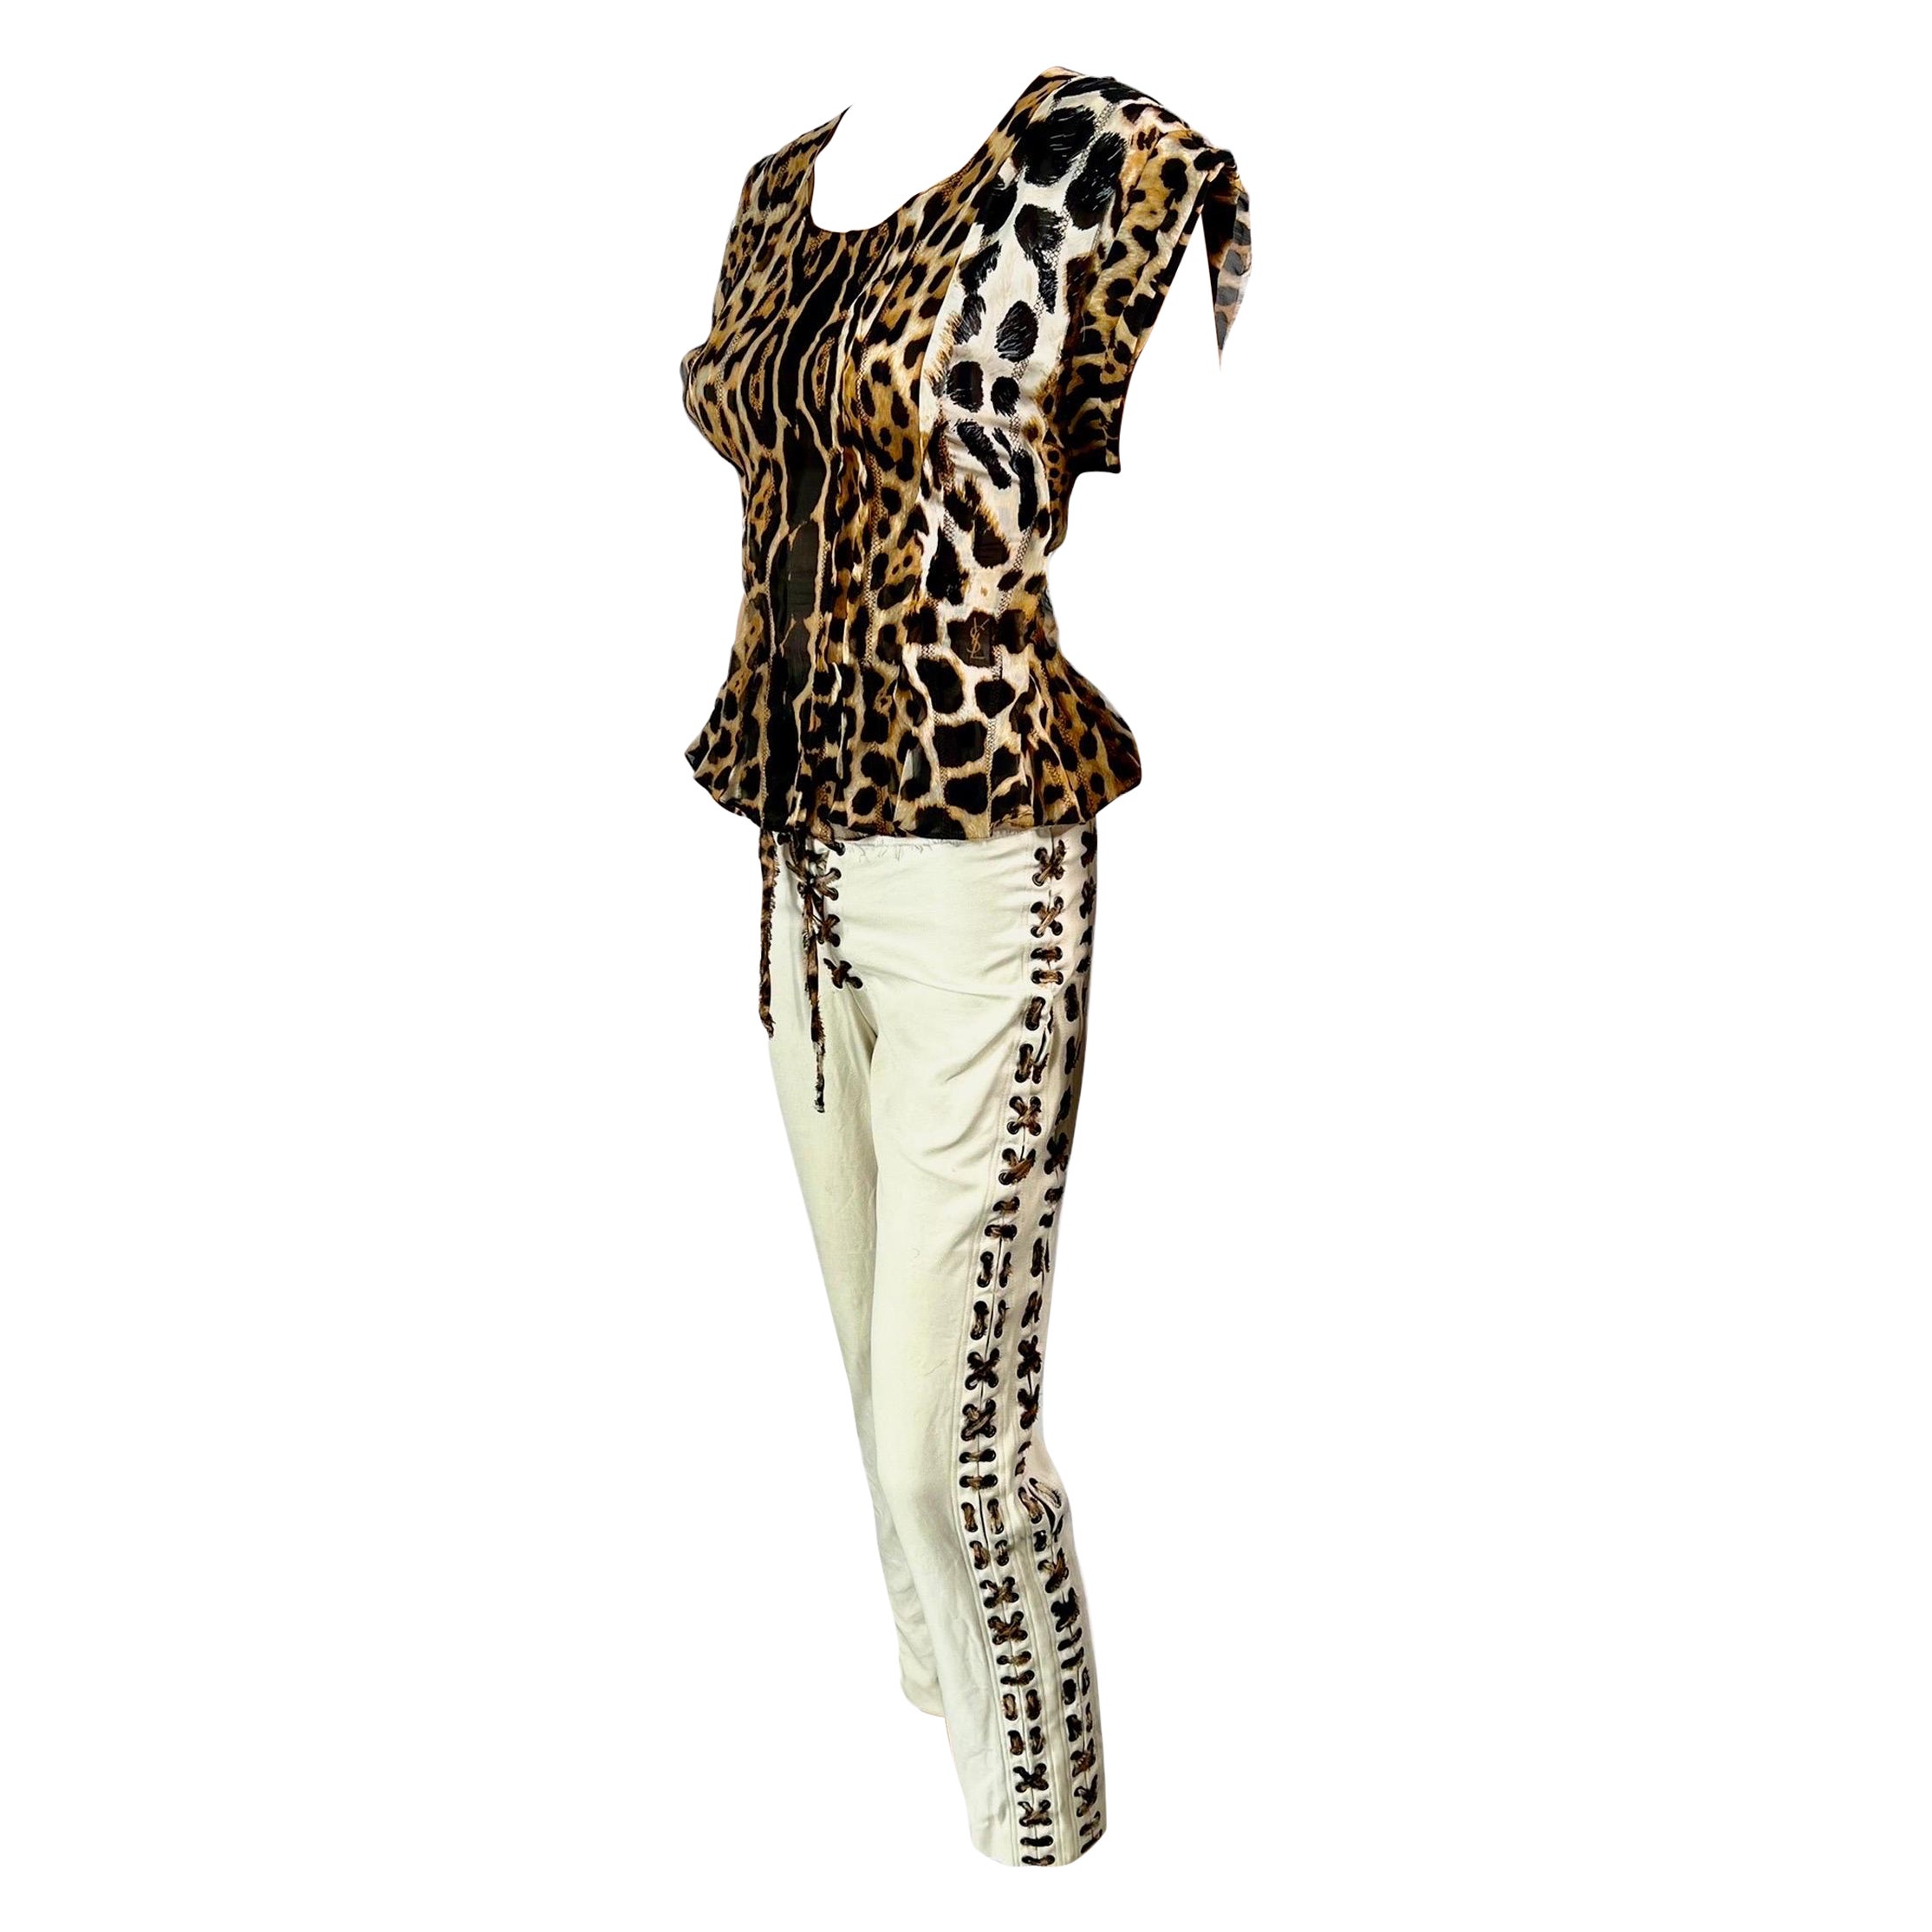 Tom Ford for Yves Saint Laurent  S/S 2002 Leopard Blouse Top & Pants 2 Piece Set